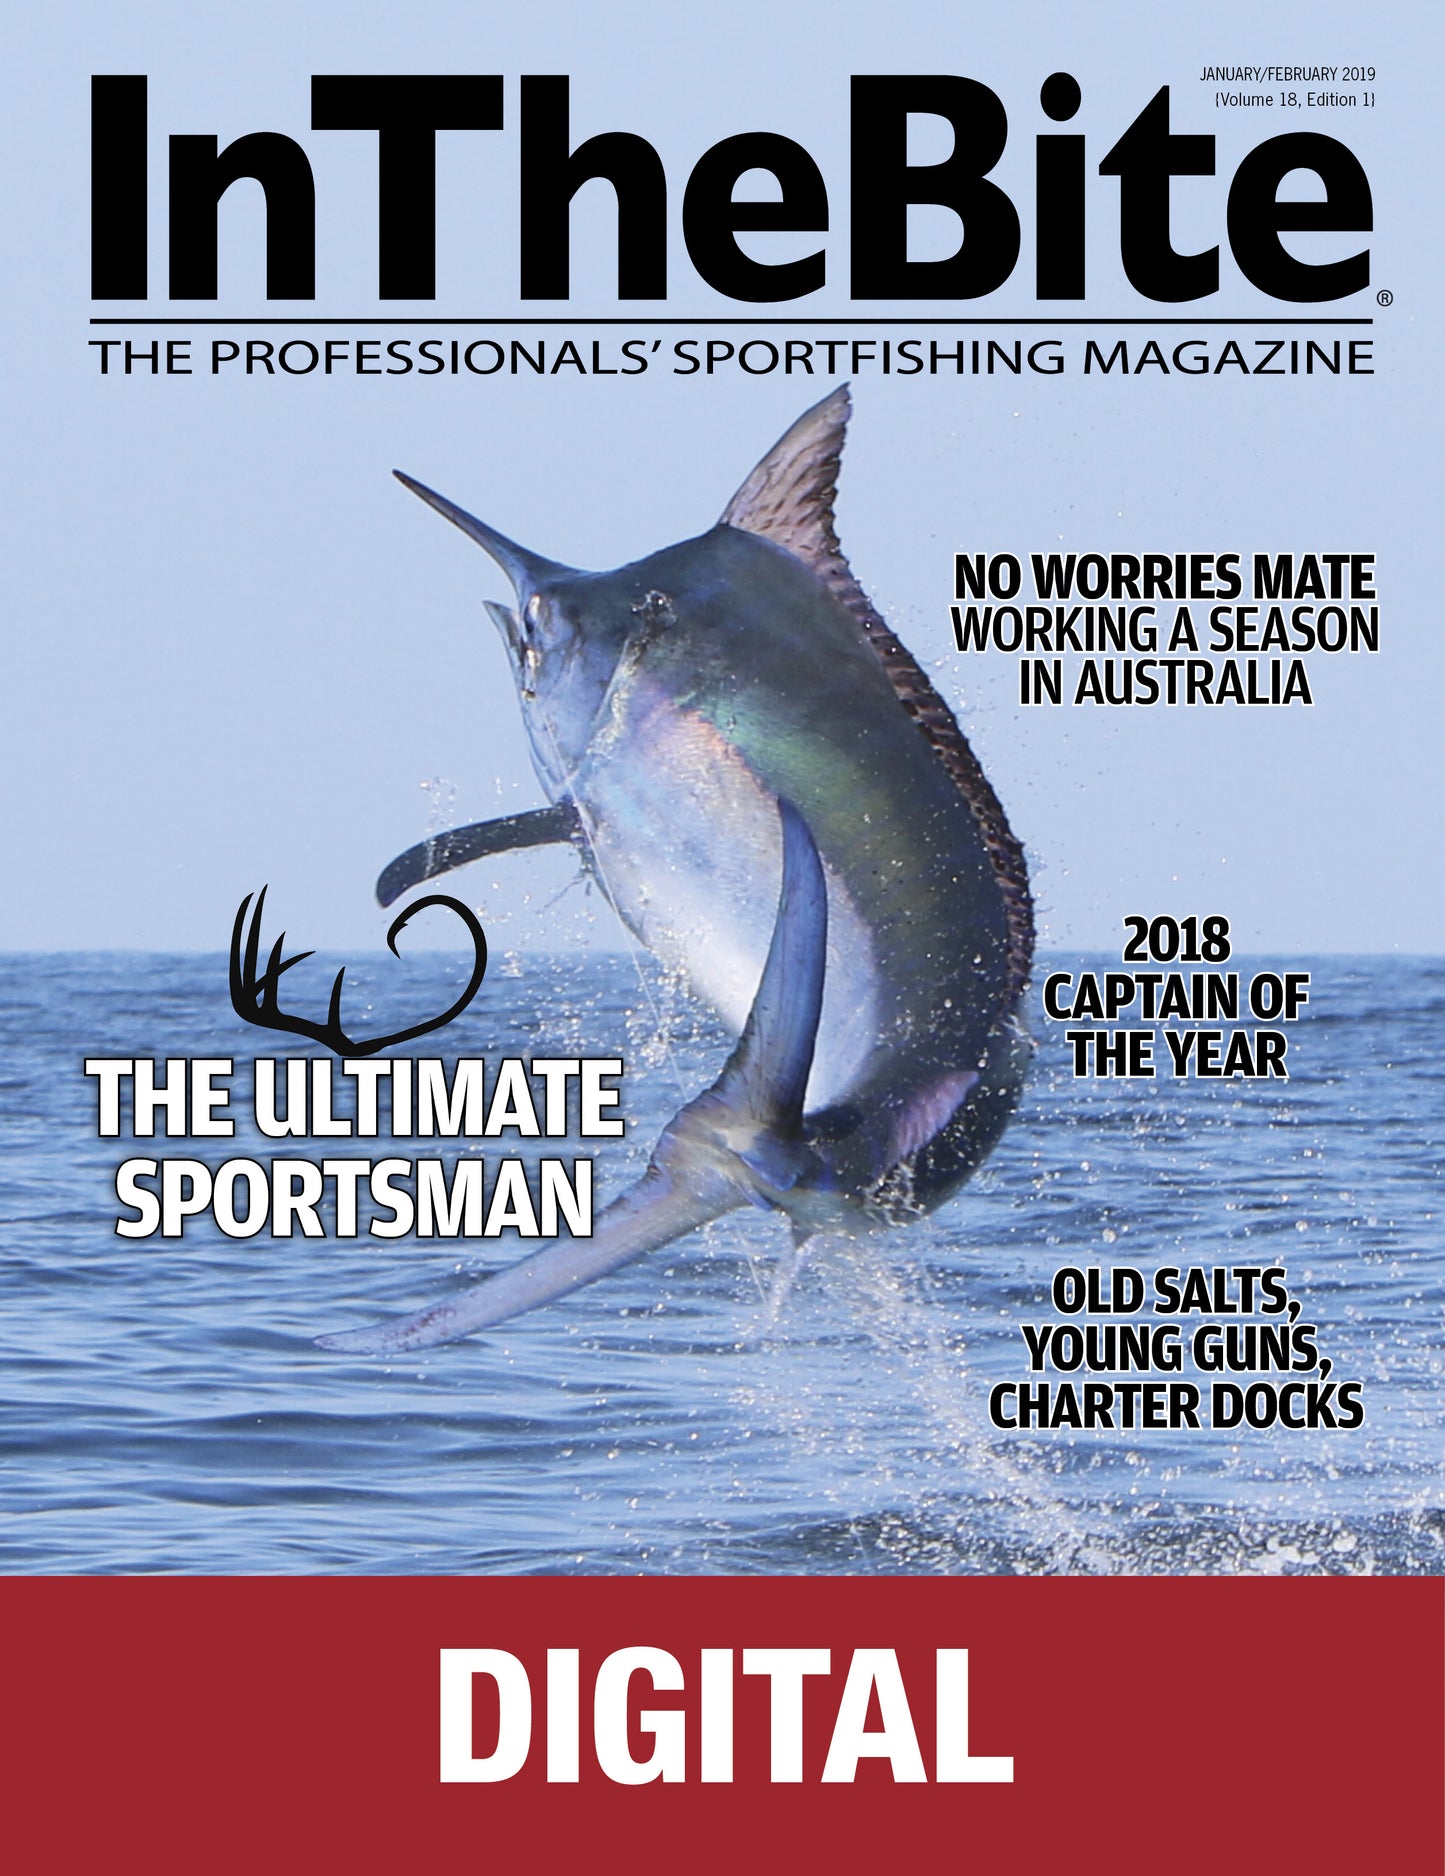 InTheBite Volume 18 Edition 01 - January/February 2019 - Digital Edition